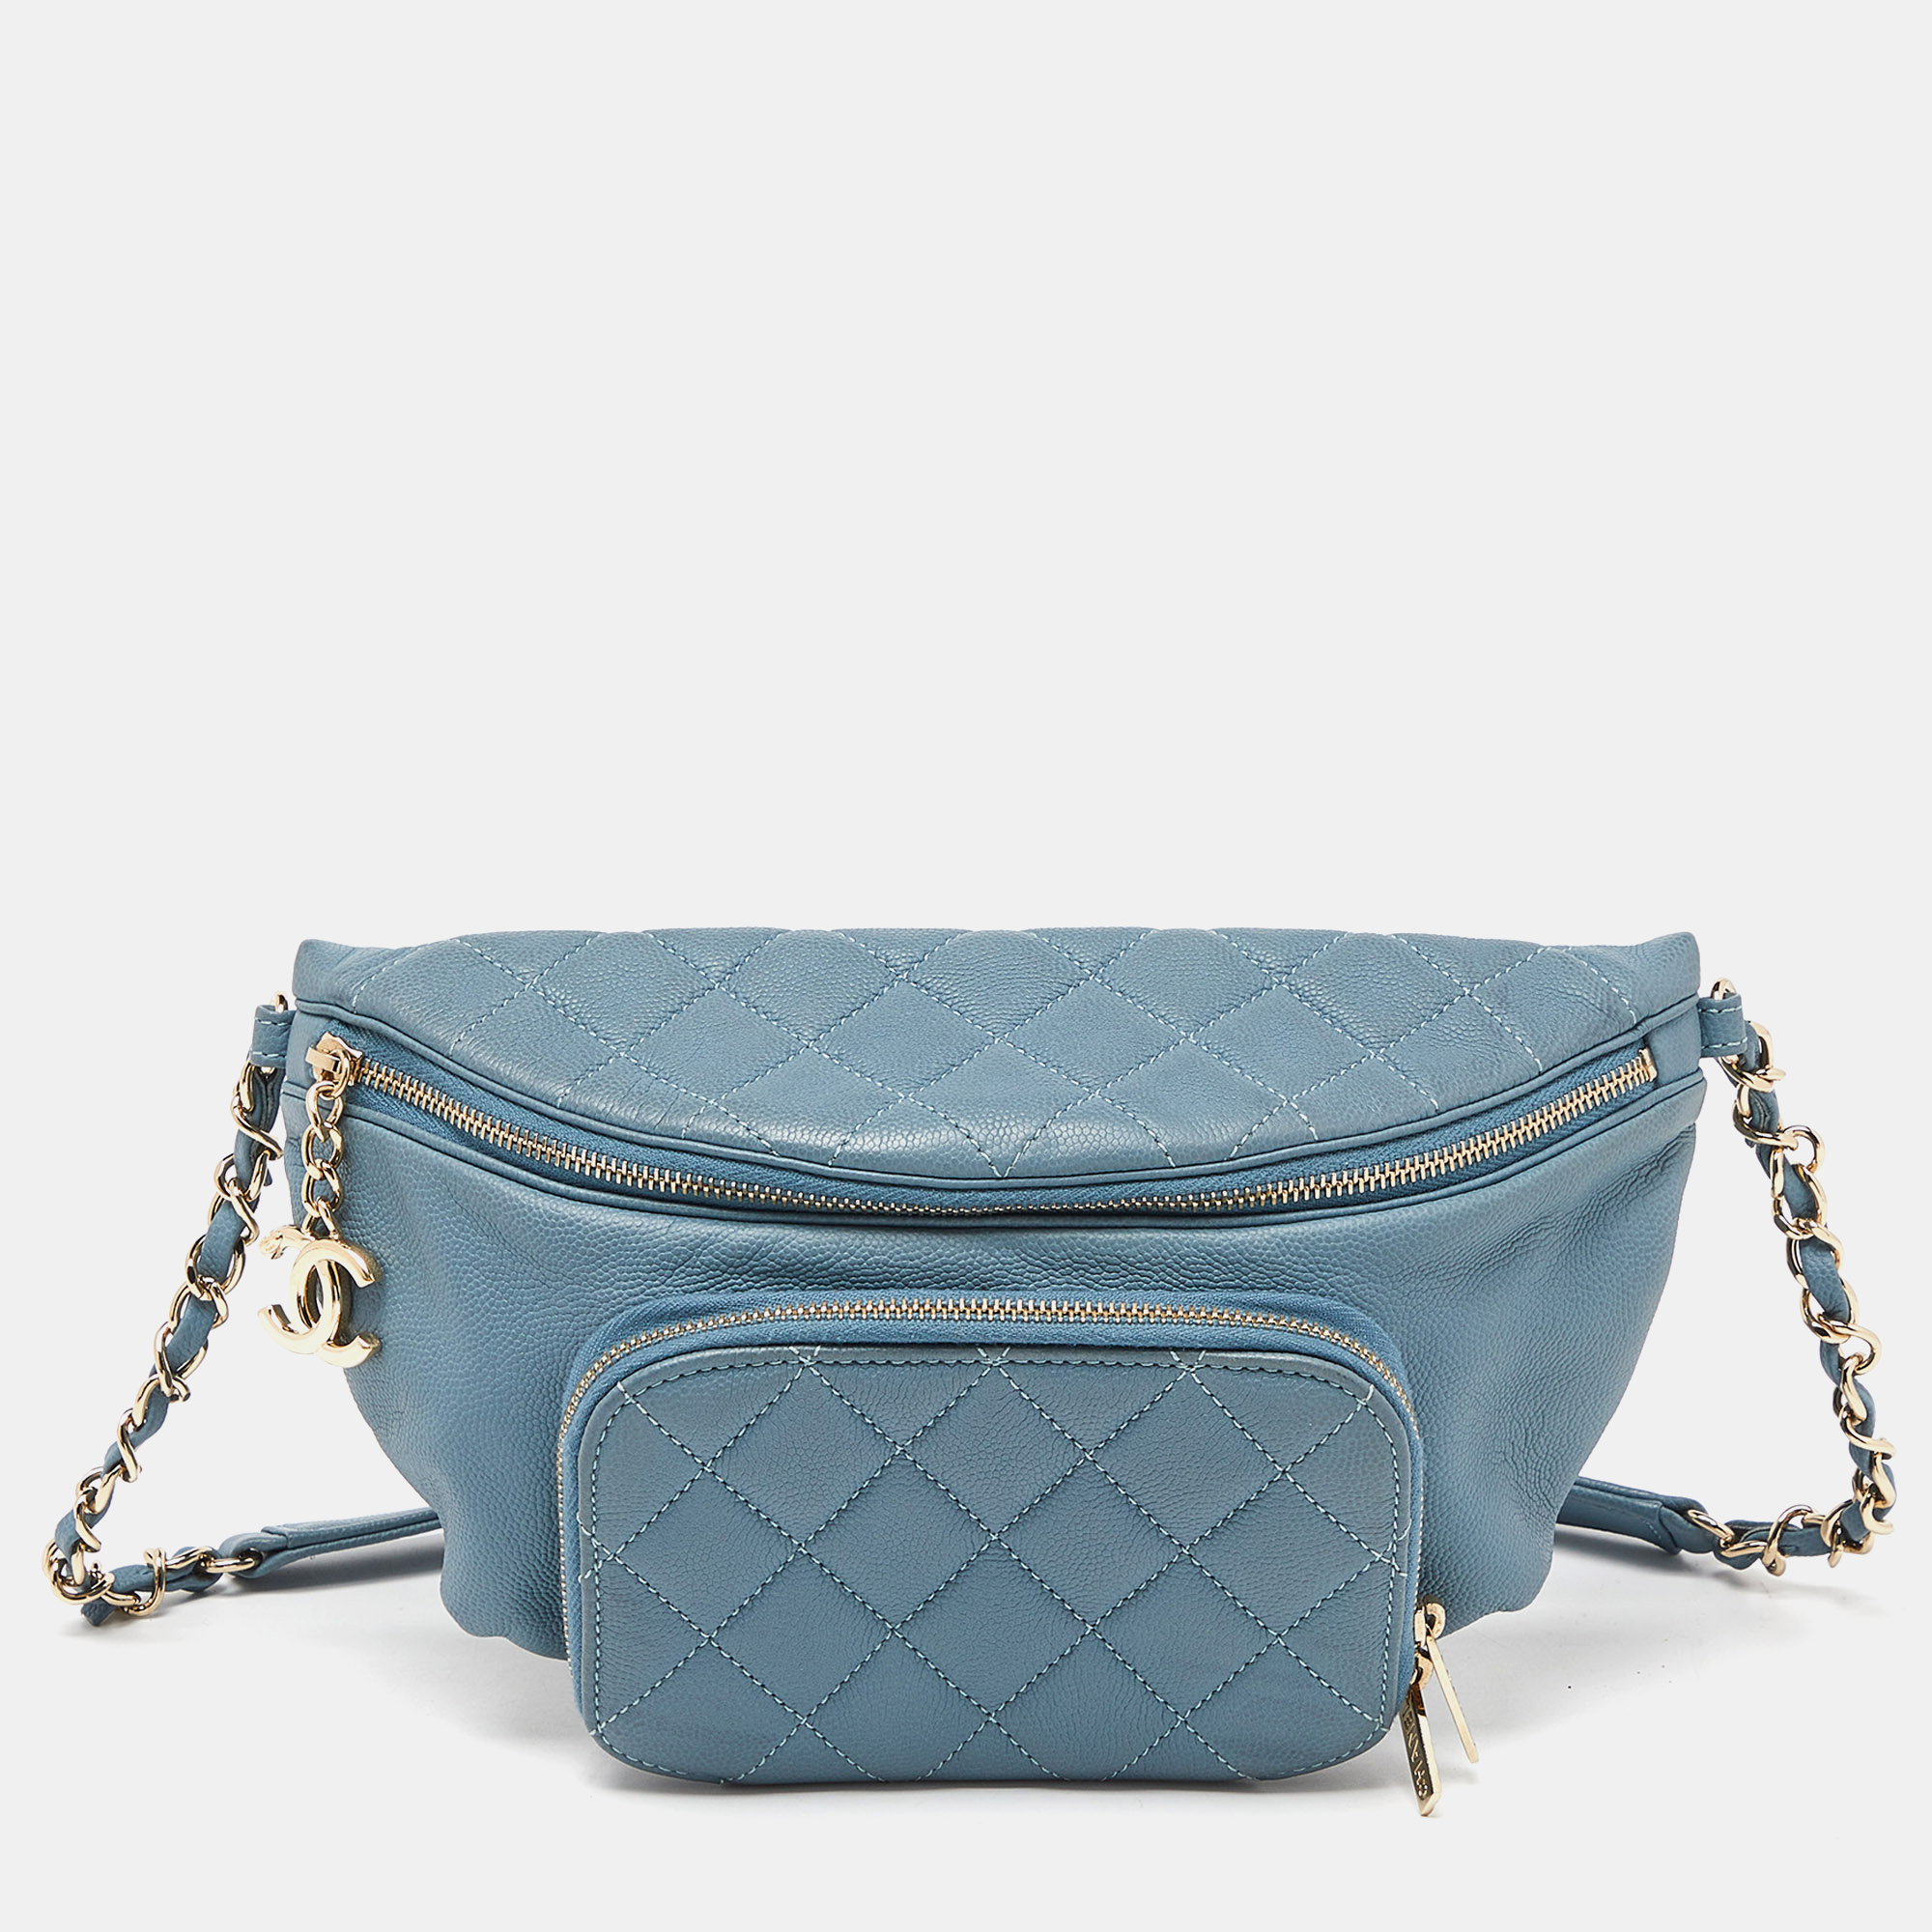 Chanel blue caviar leather business affinity waist bag